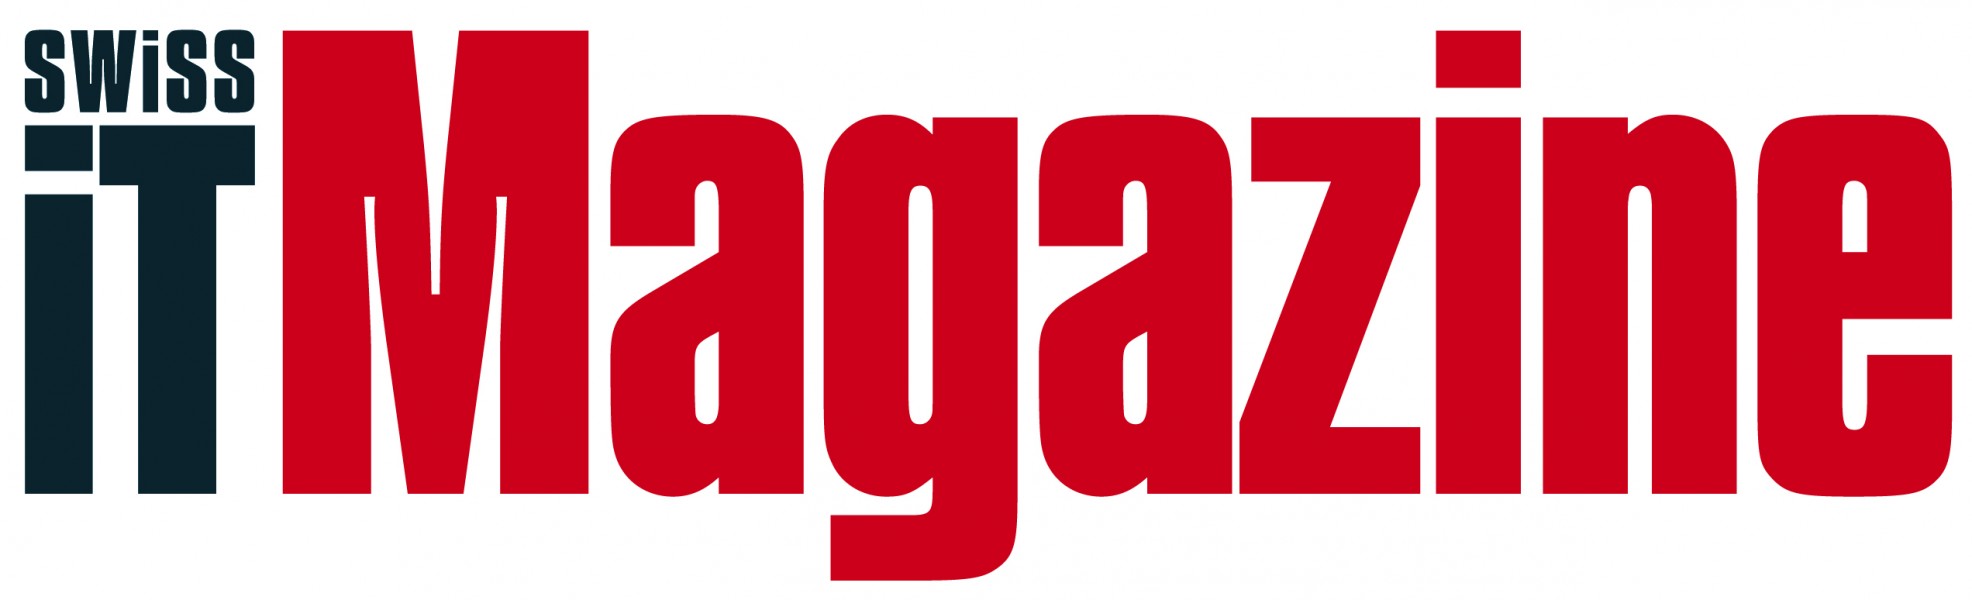 Logo SwissITMagazine 4c